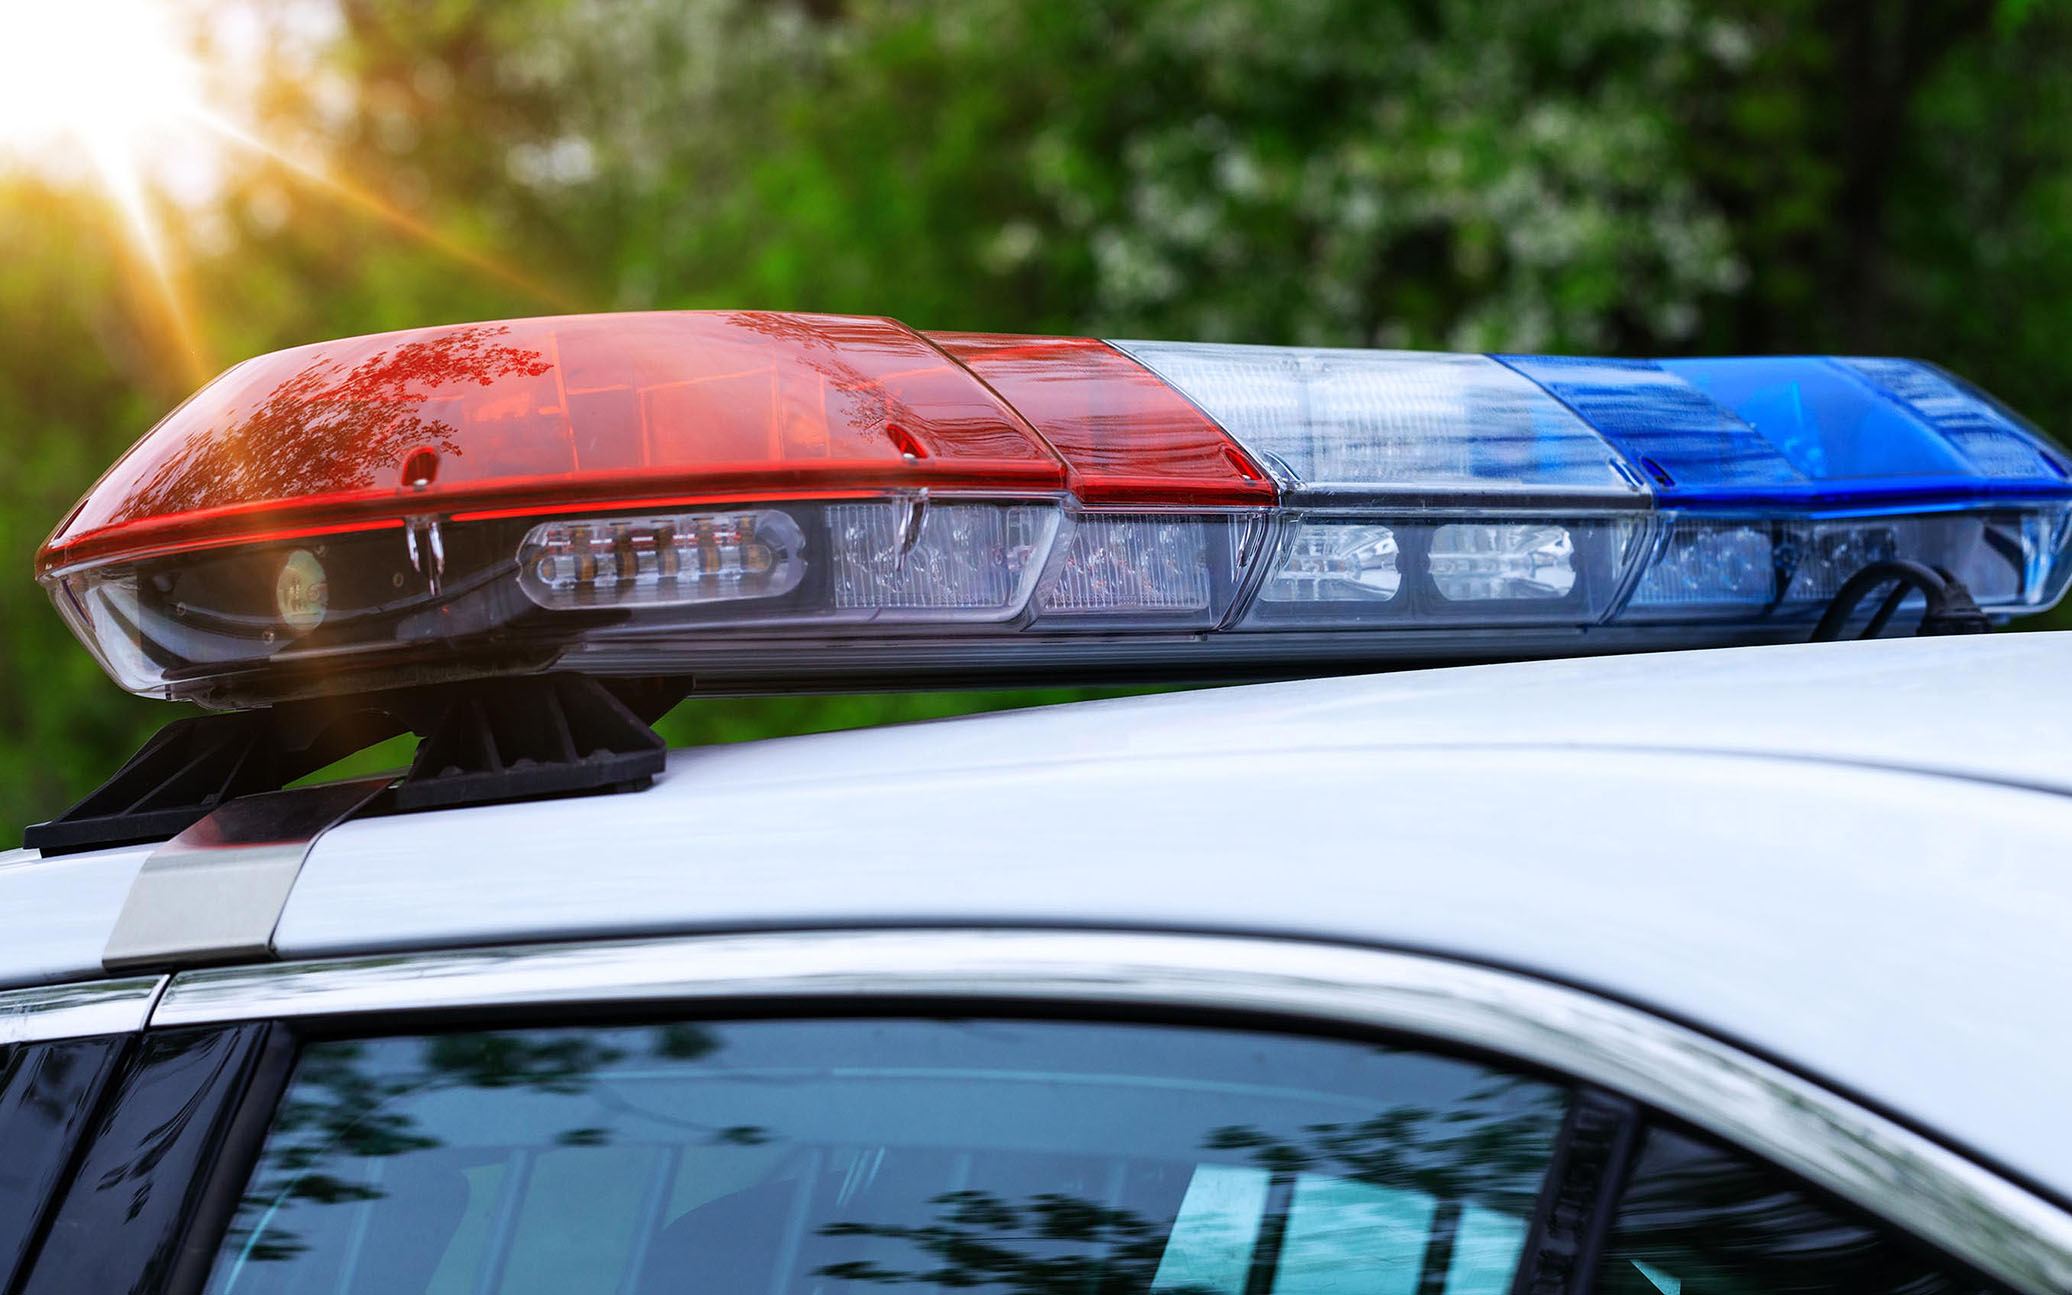 Police Division’s Autism Consciousness Patrol Automotive Prompts Backlash